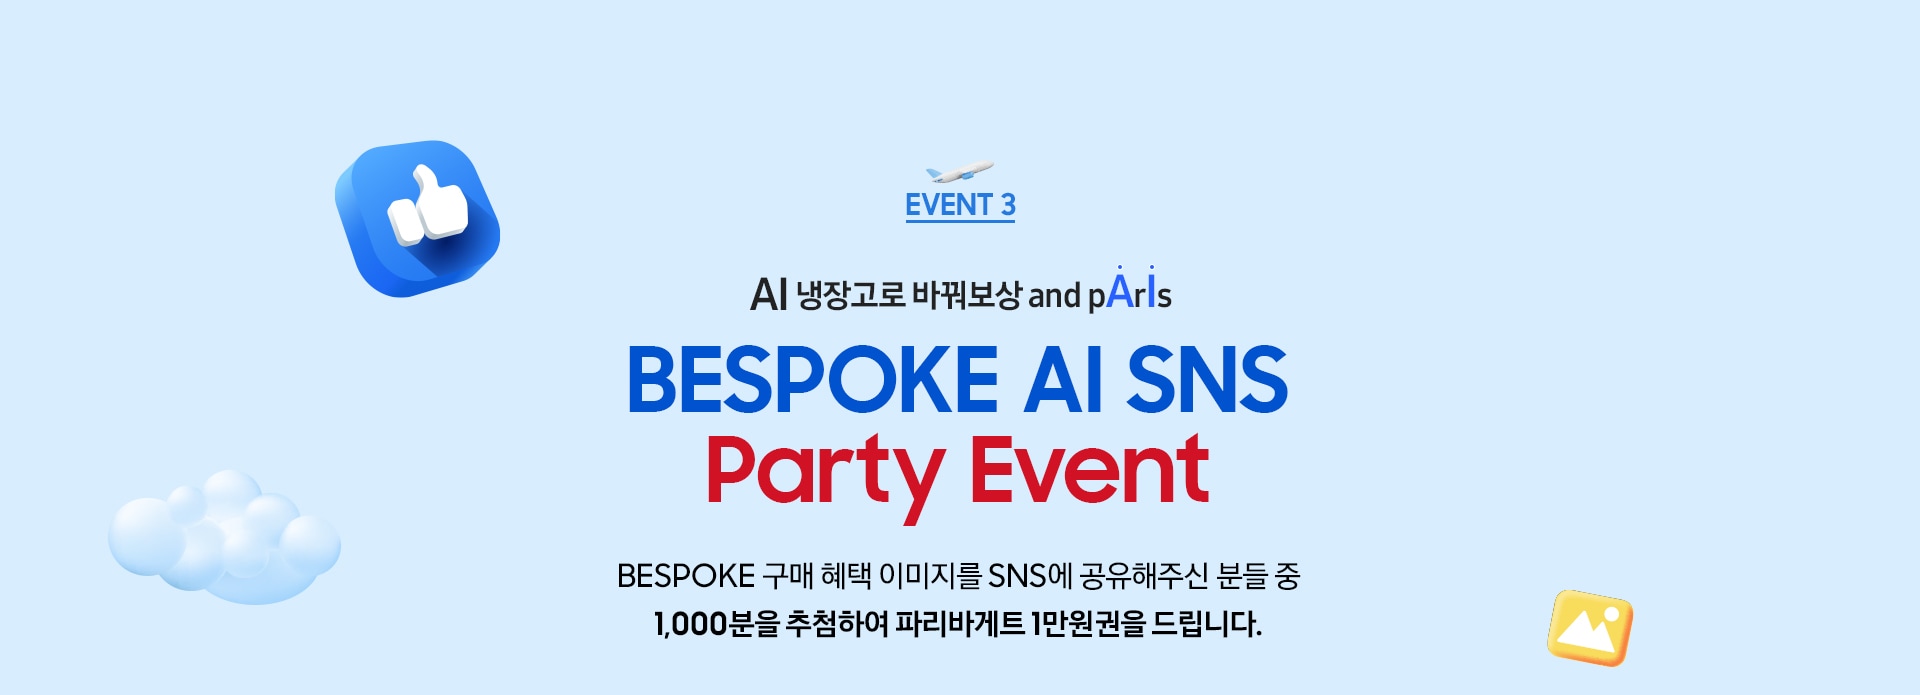 EVENT 3, AI 냉장고로 바꿔보상 and pArIs, BESPOKE AI SNS Party Event, BESPOKE 구매 혜택 이미지를 SNS에 공유해주신 분들 중 1,000분을 대상으로 파리바게트 1만원권을 드립니다.